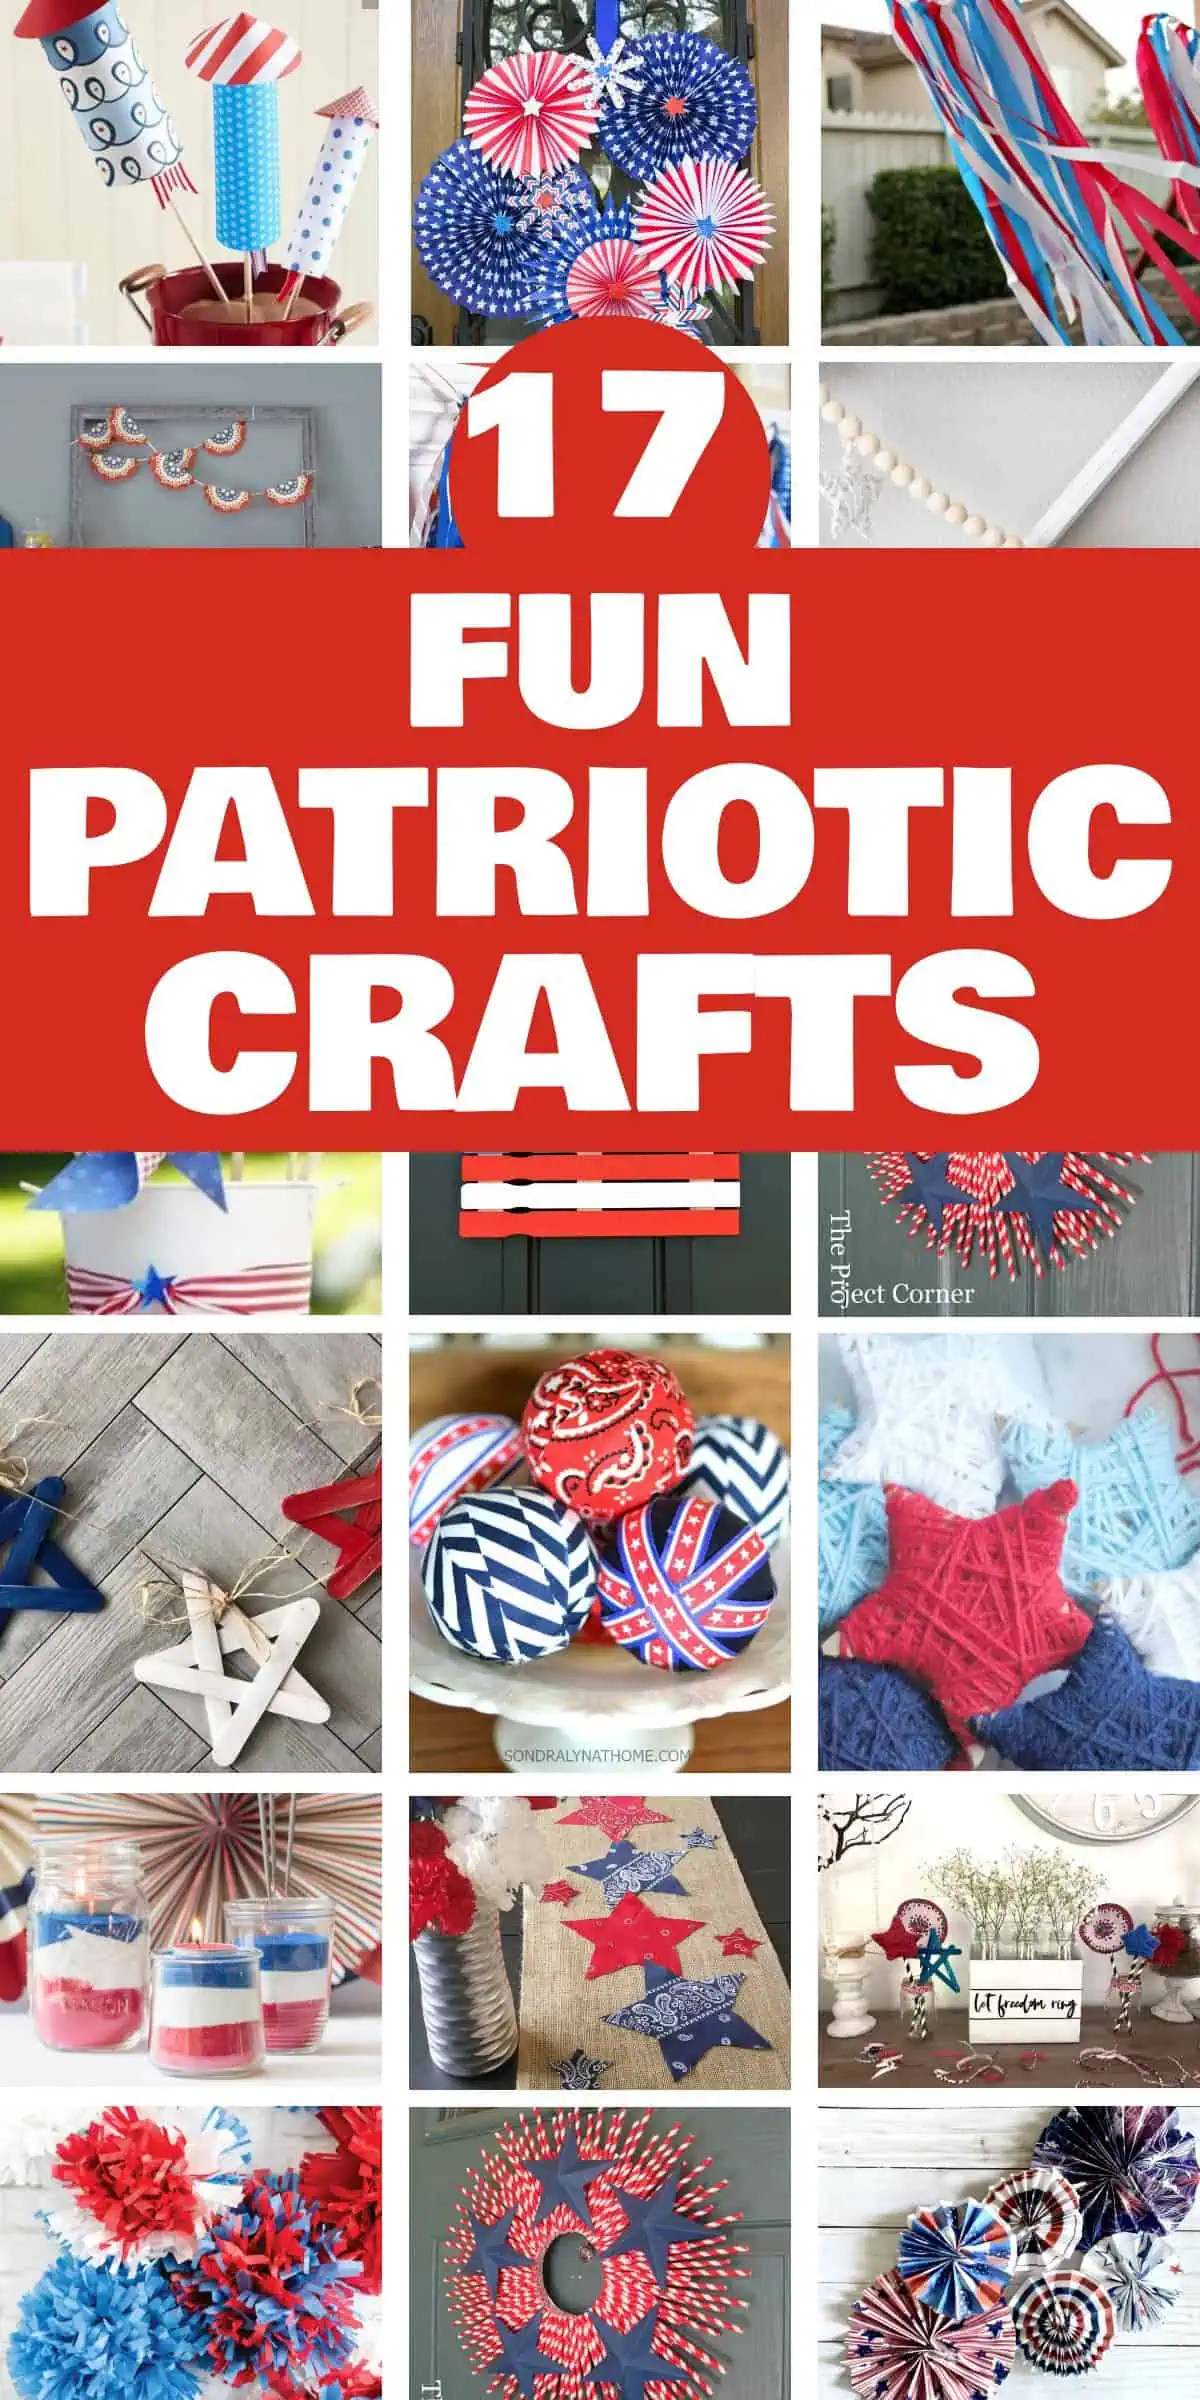 17 Fun Patriotic Crafts